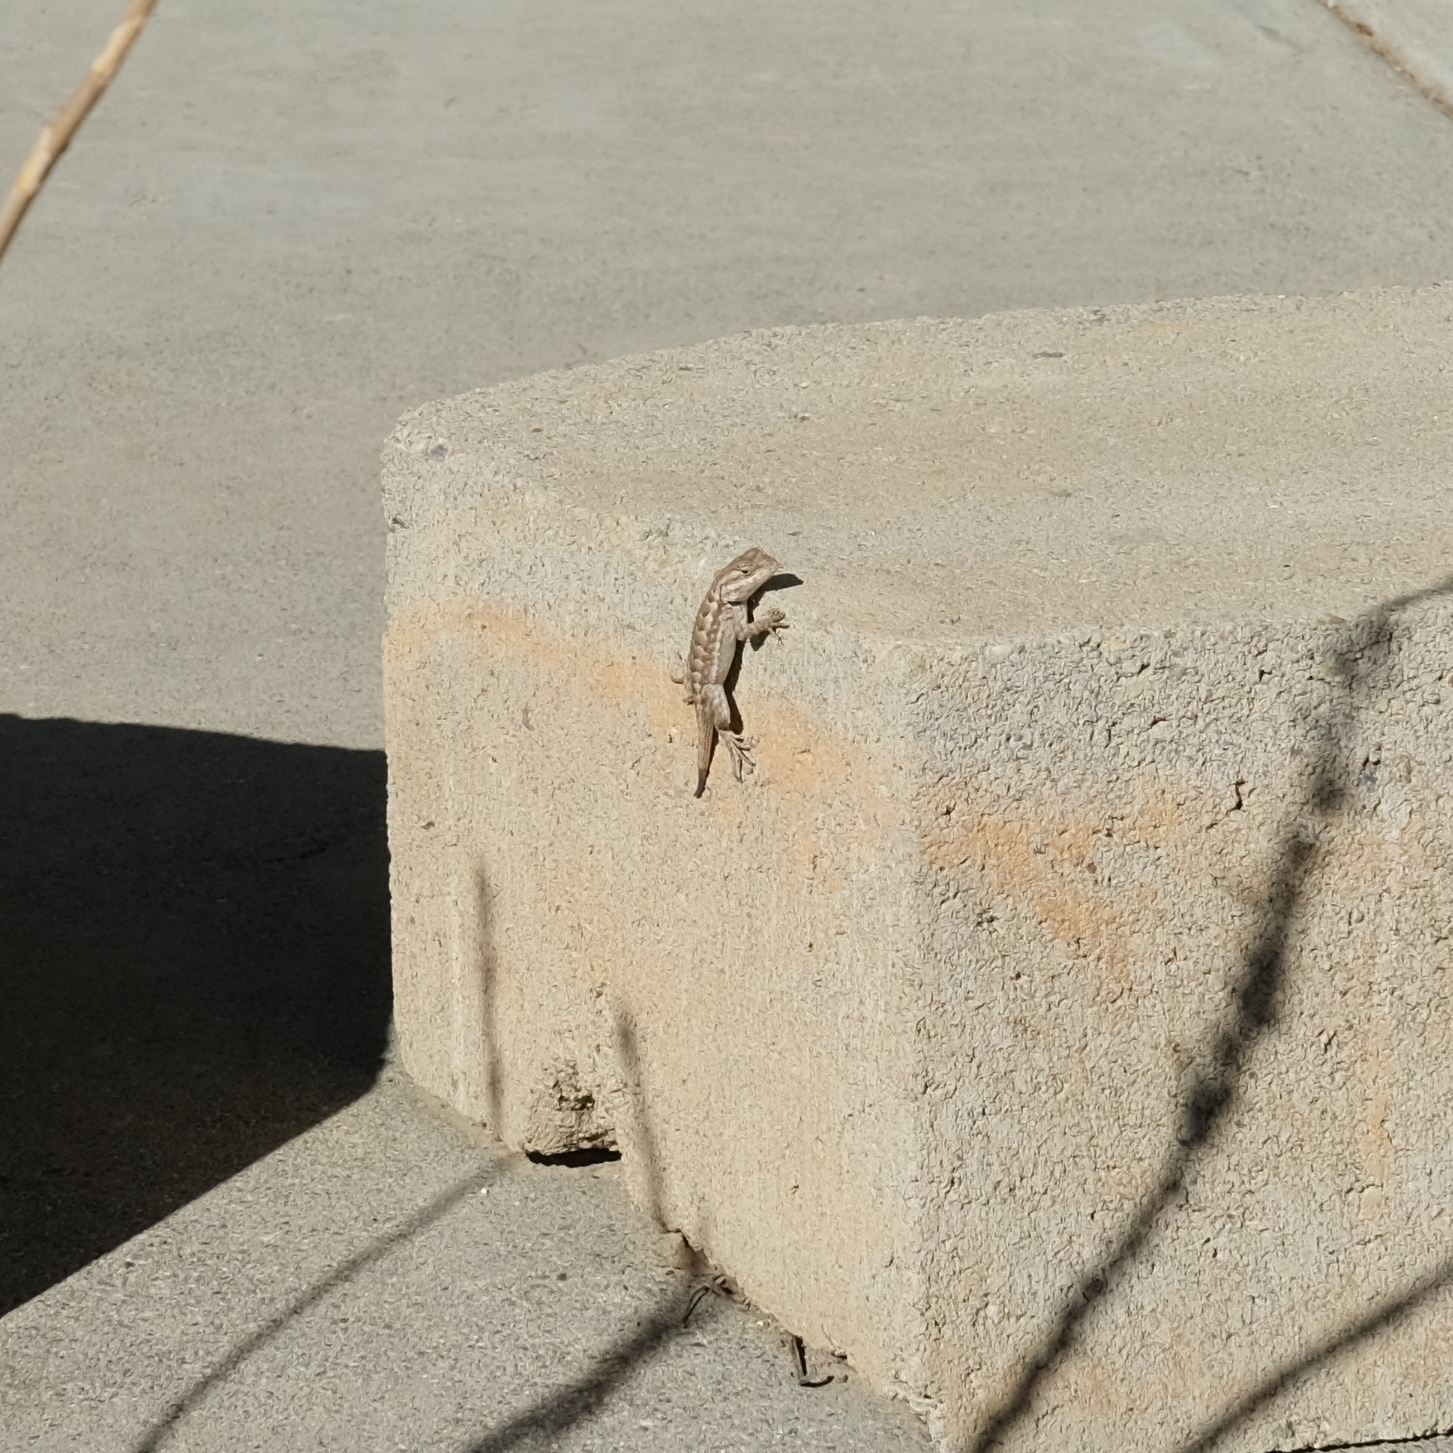 juvenile lizard sunning on a cinder block